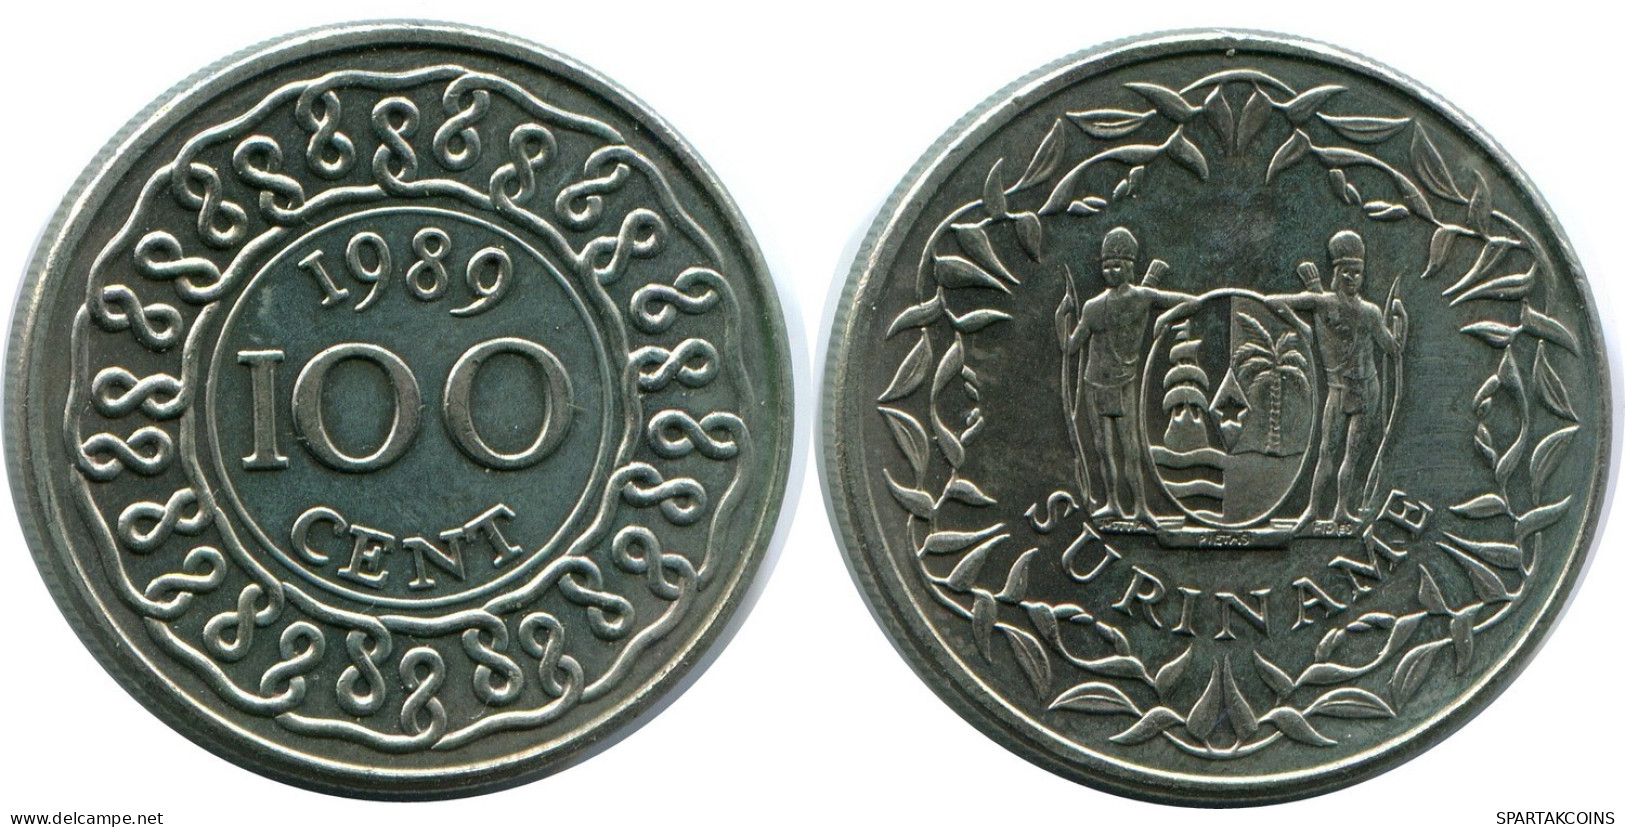 100 CENTS 1989 SURINAME Moneda #AR923.E.A - Suriname 1975 - ...